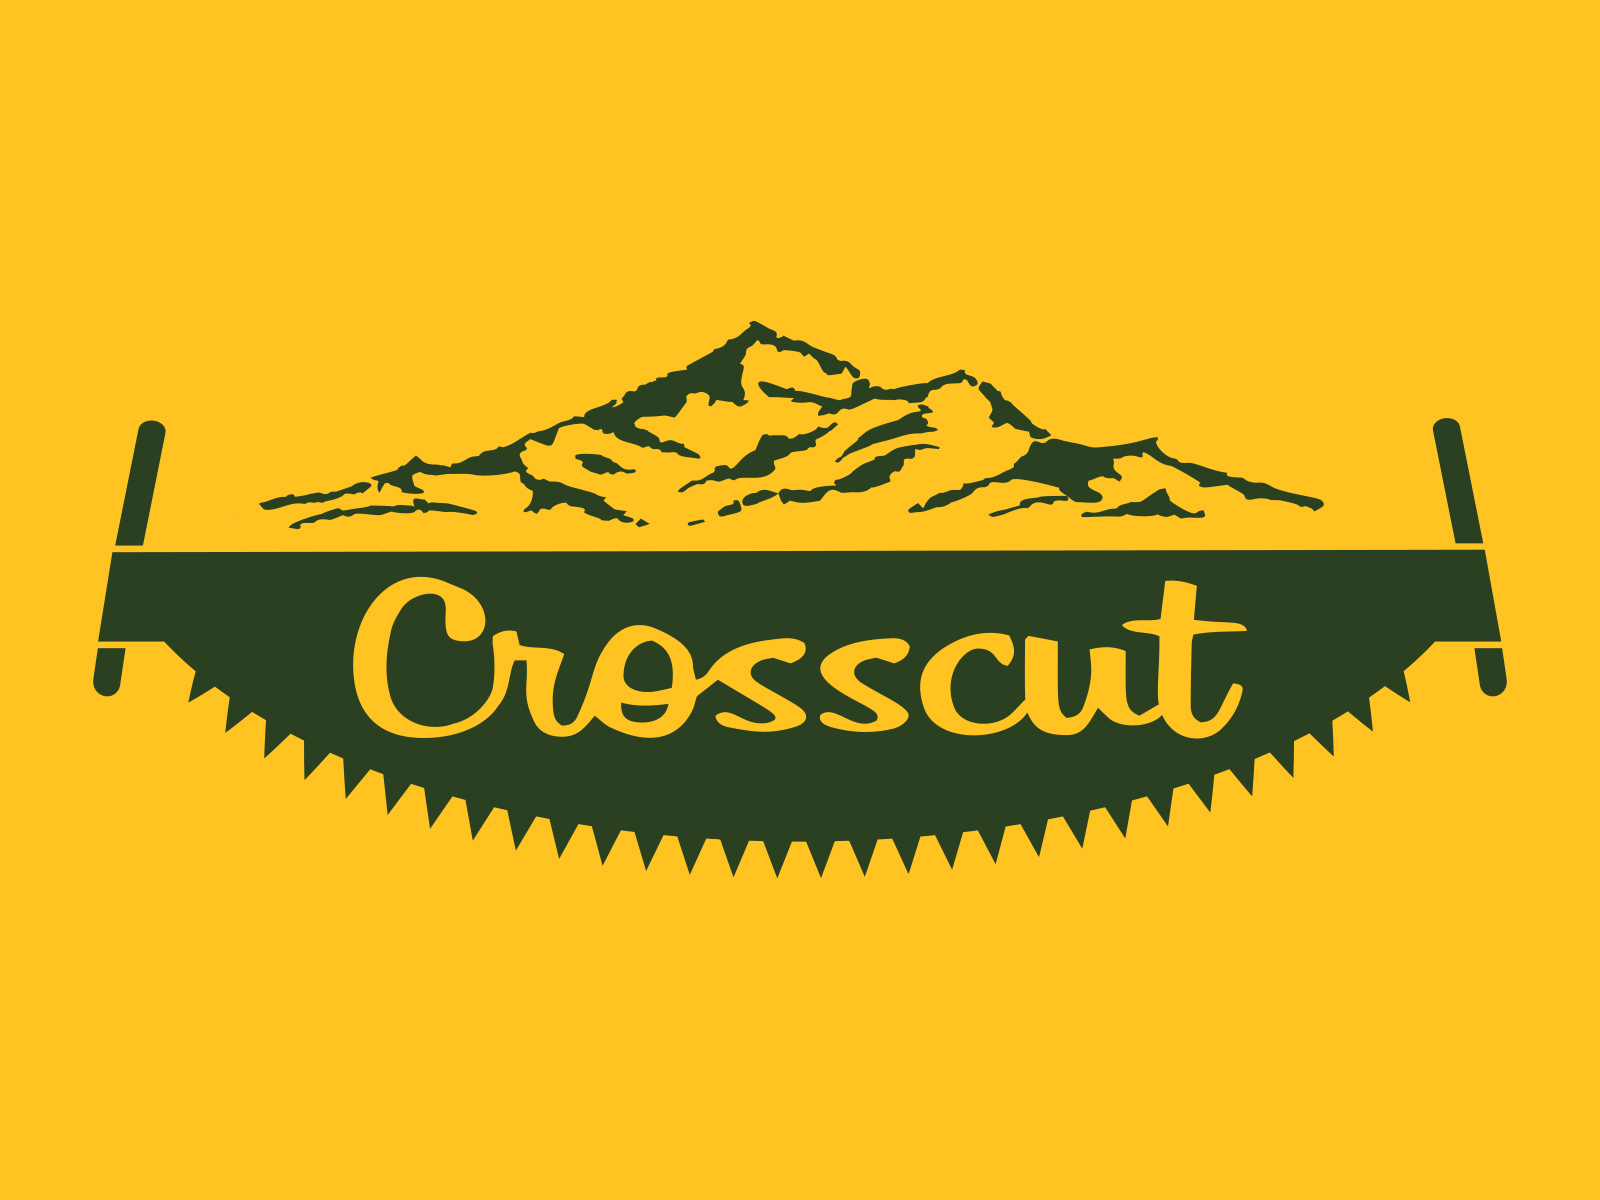 Crosscut - Before 2